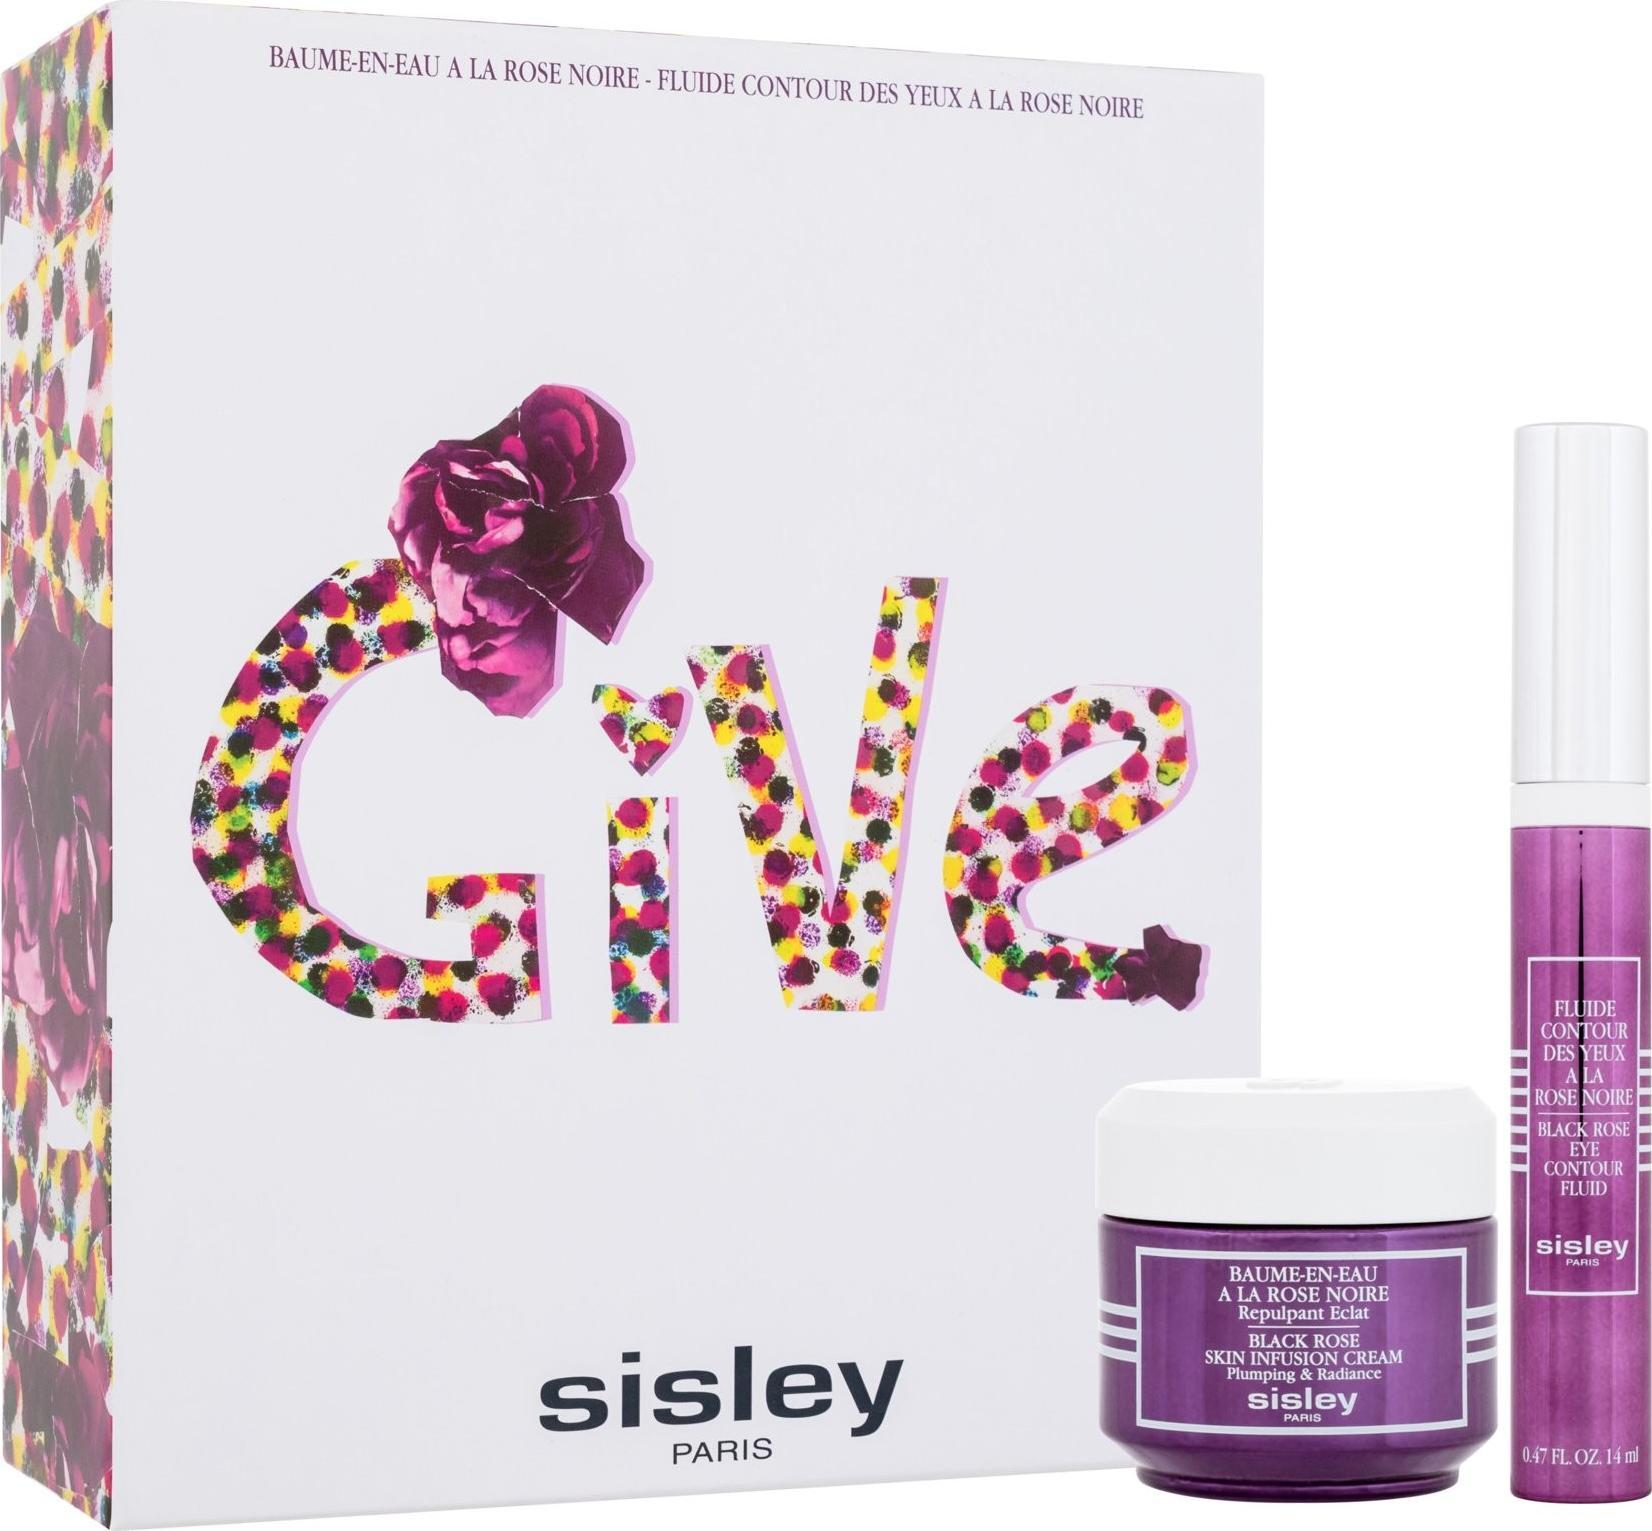 Sisley Zestaw Give (Black Rose Skin Ifusion Cream 50ml+black Rose Eye Contour Fluide 14ml) 130302 (3473311320216)